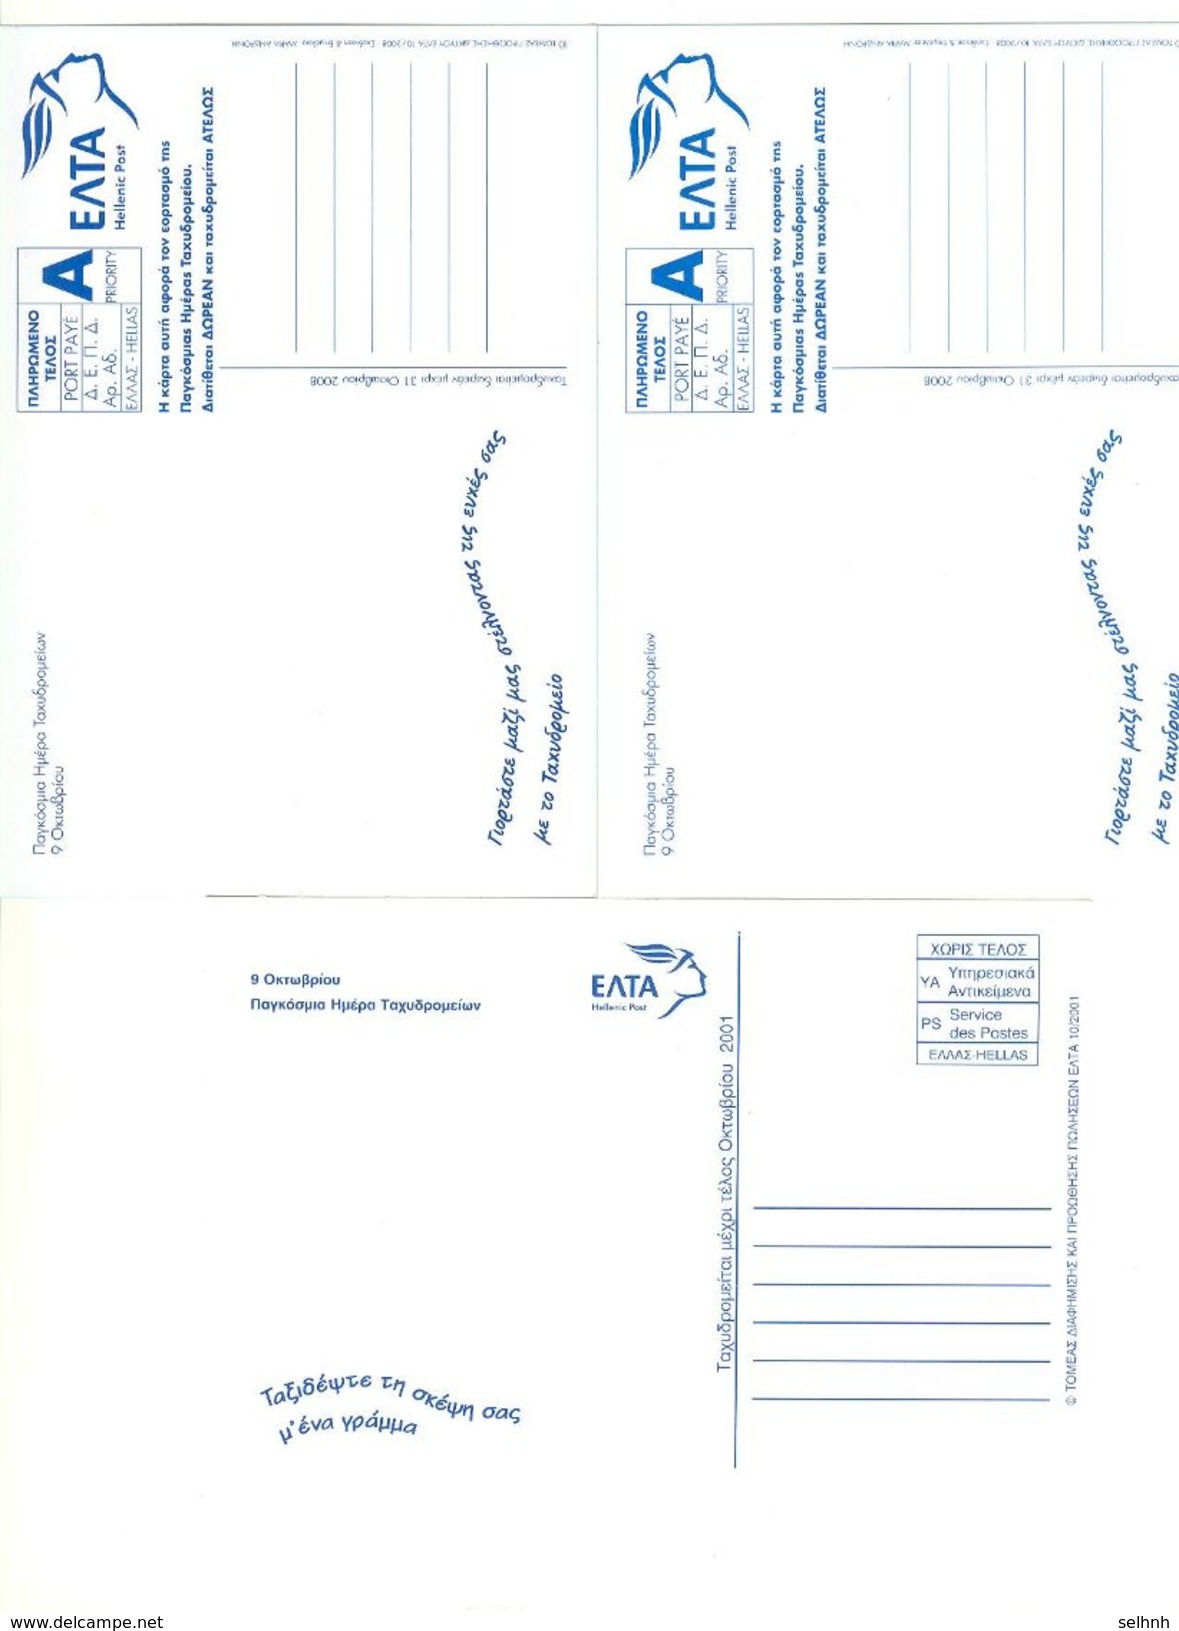 GREECE GRECE GREEK COMMEMORATIVE POSTMARK 70 YEARS OF PHILATELIC SOSIETY OF CORFU 9-10-2001 ON CARD FROM ELTA - Postembleem & Poststempel